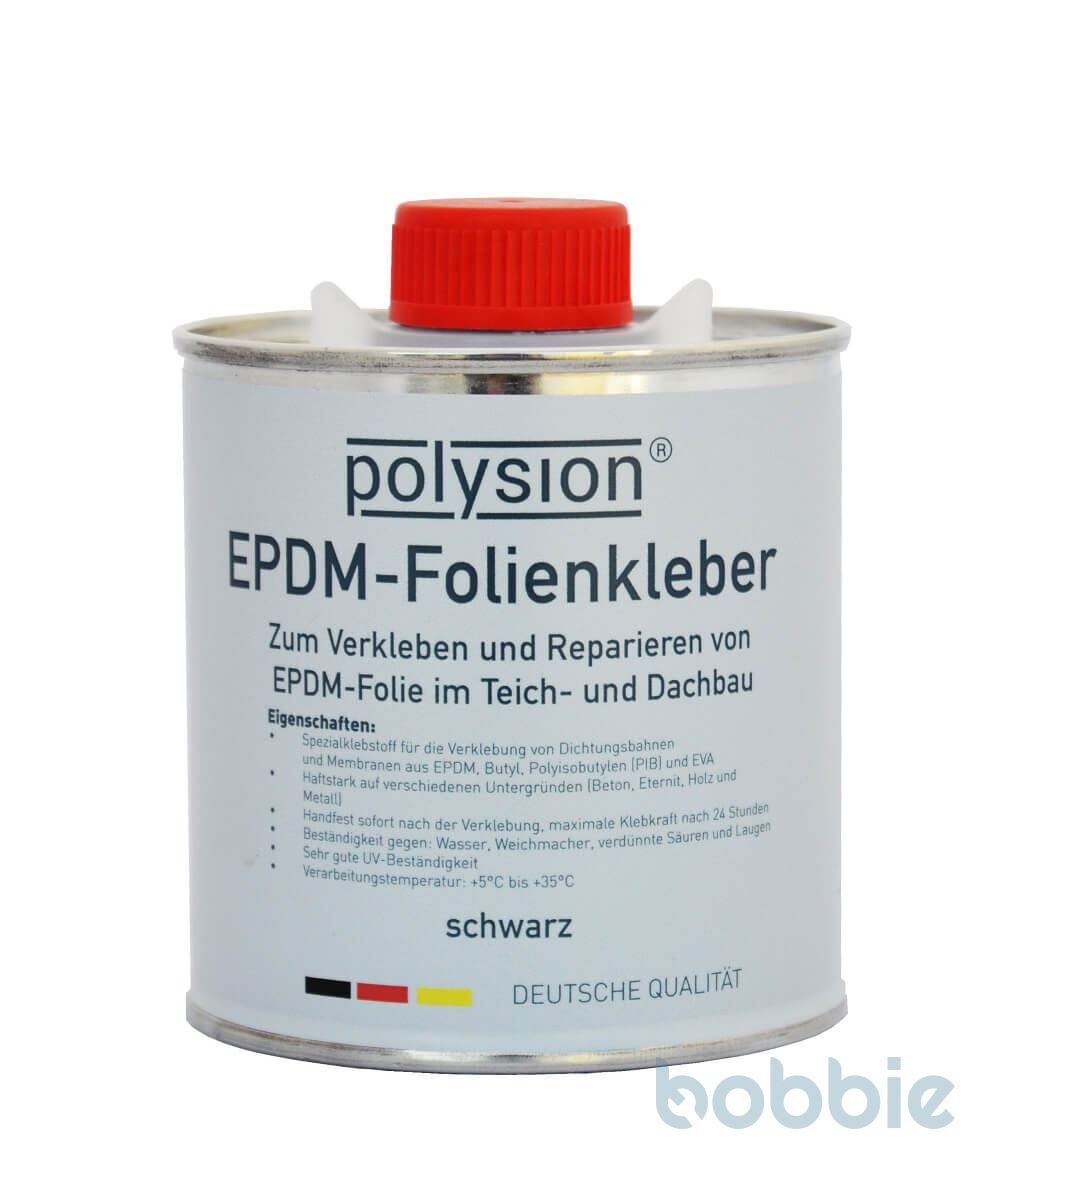 Polysion EPDM- Folienkleber